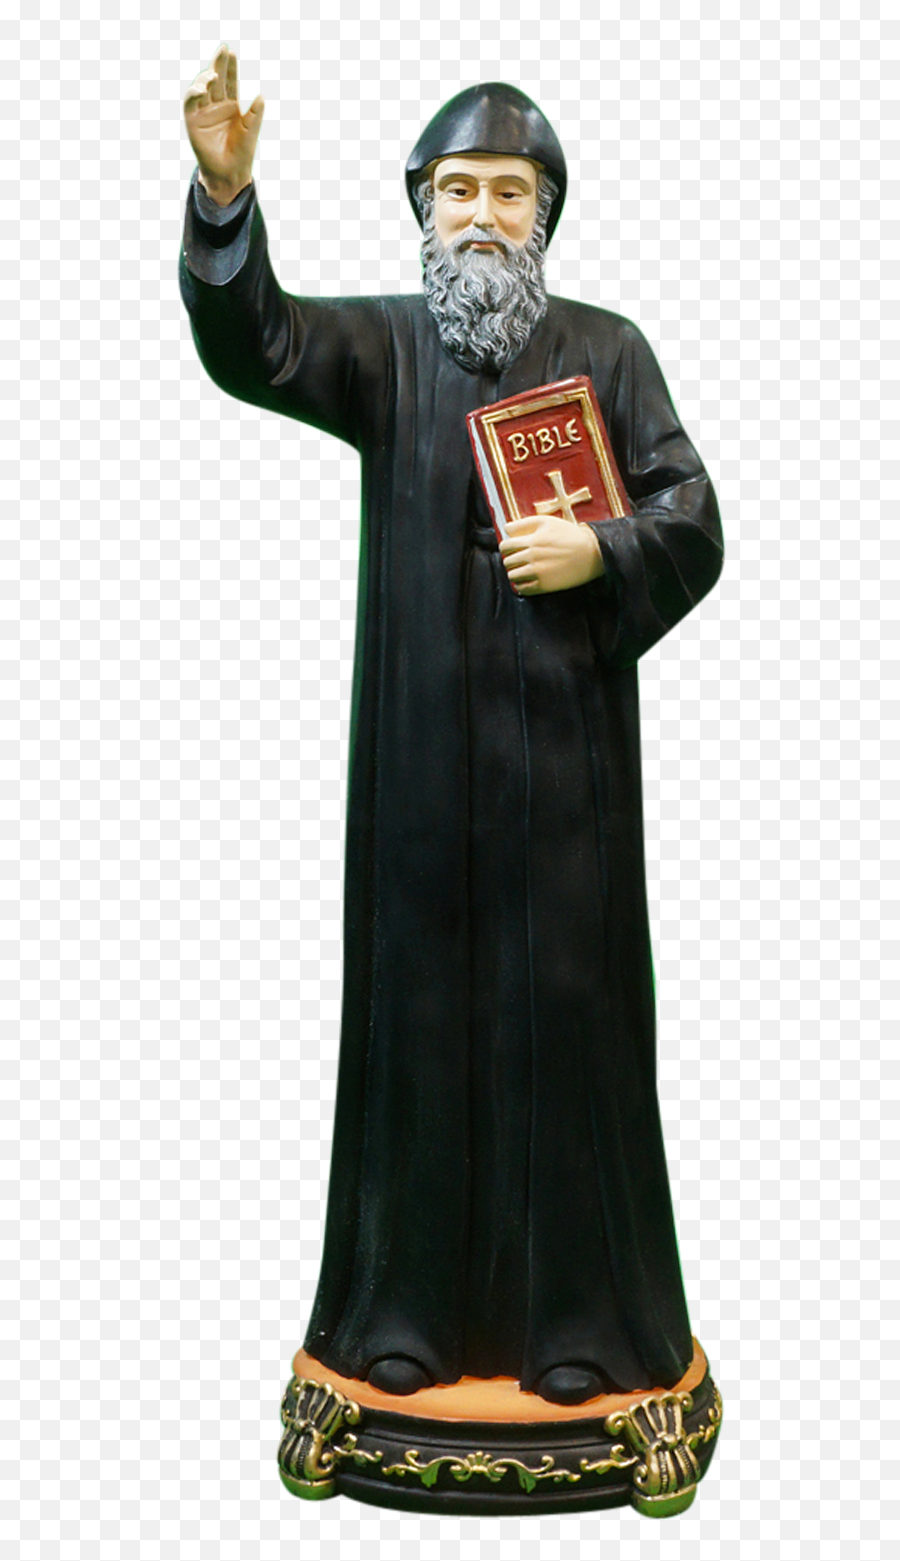 Saint Charbel Statue The Monk Of Lebanon - Magician Emoji,Emotion Monk Statue